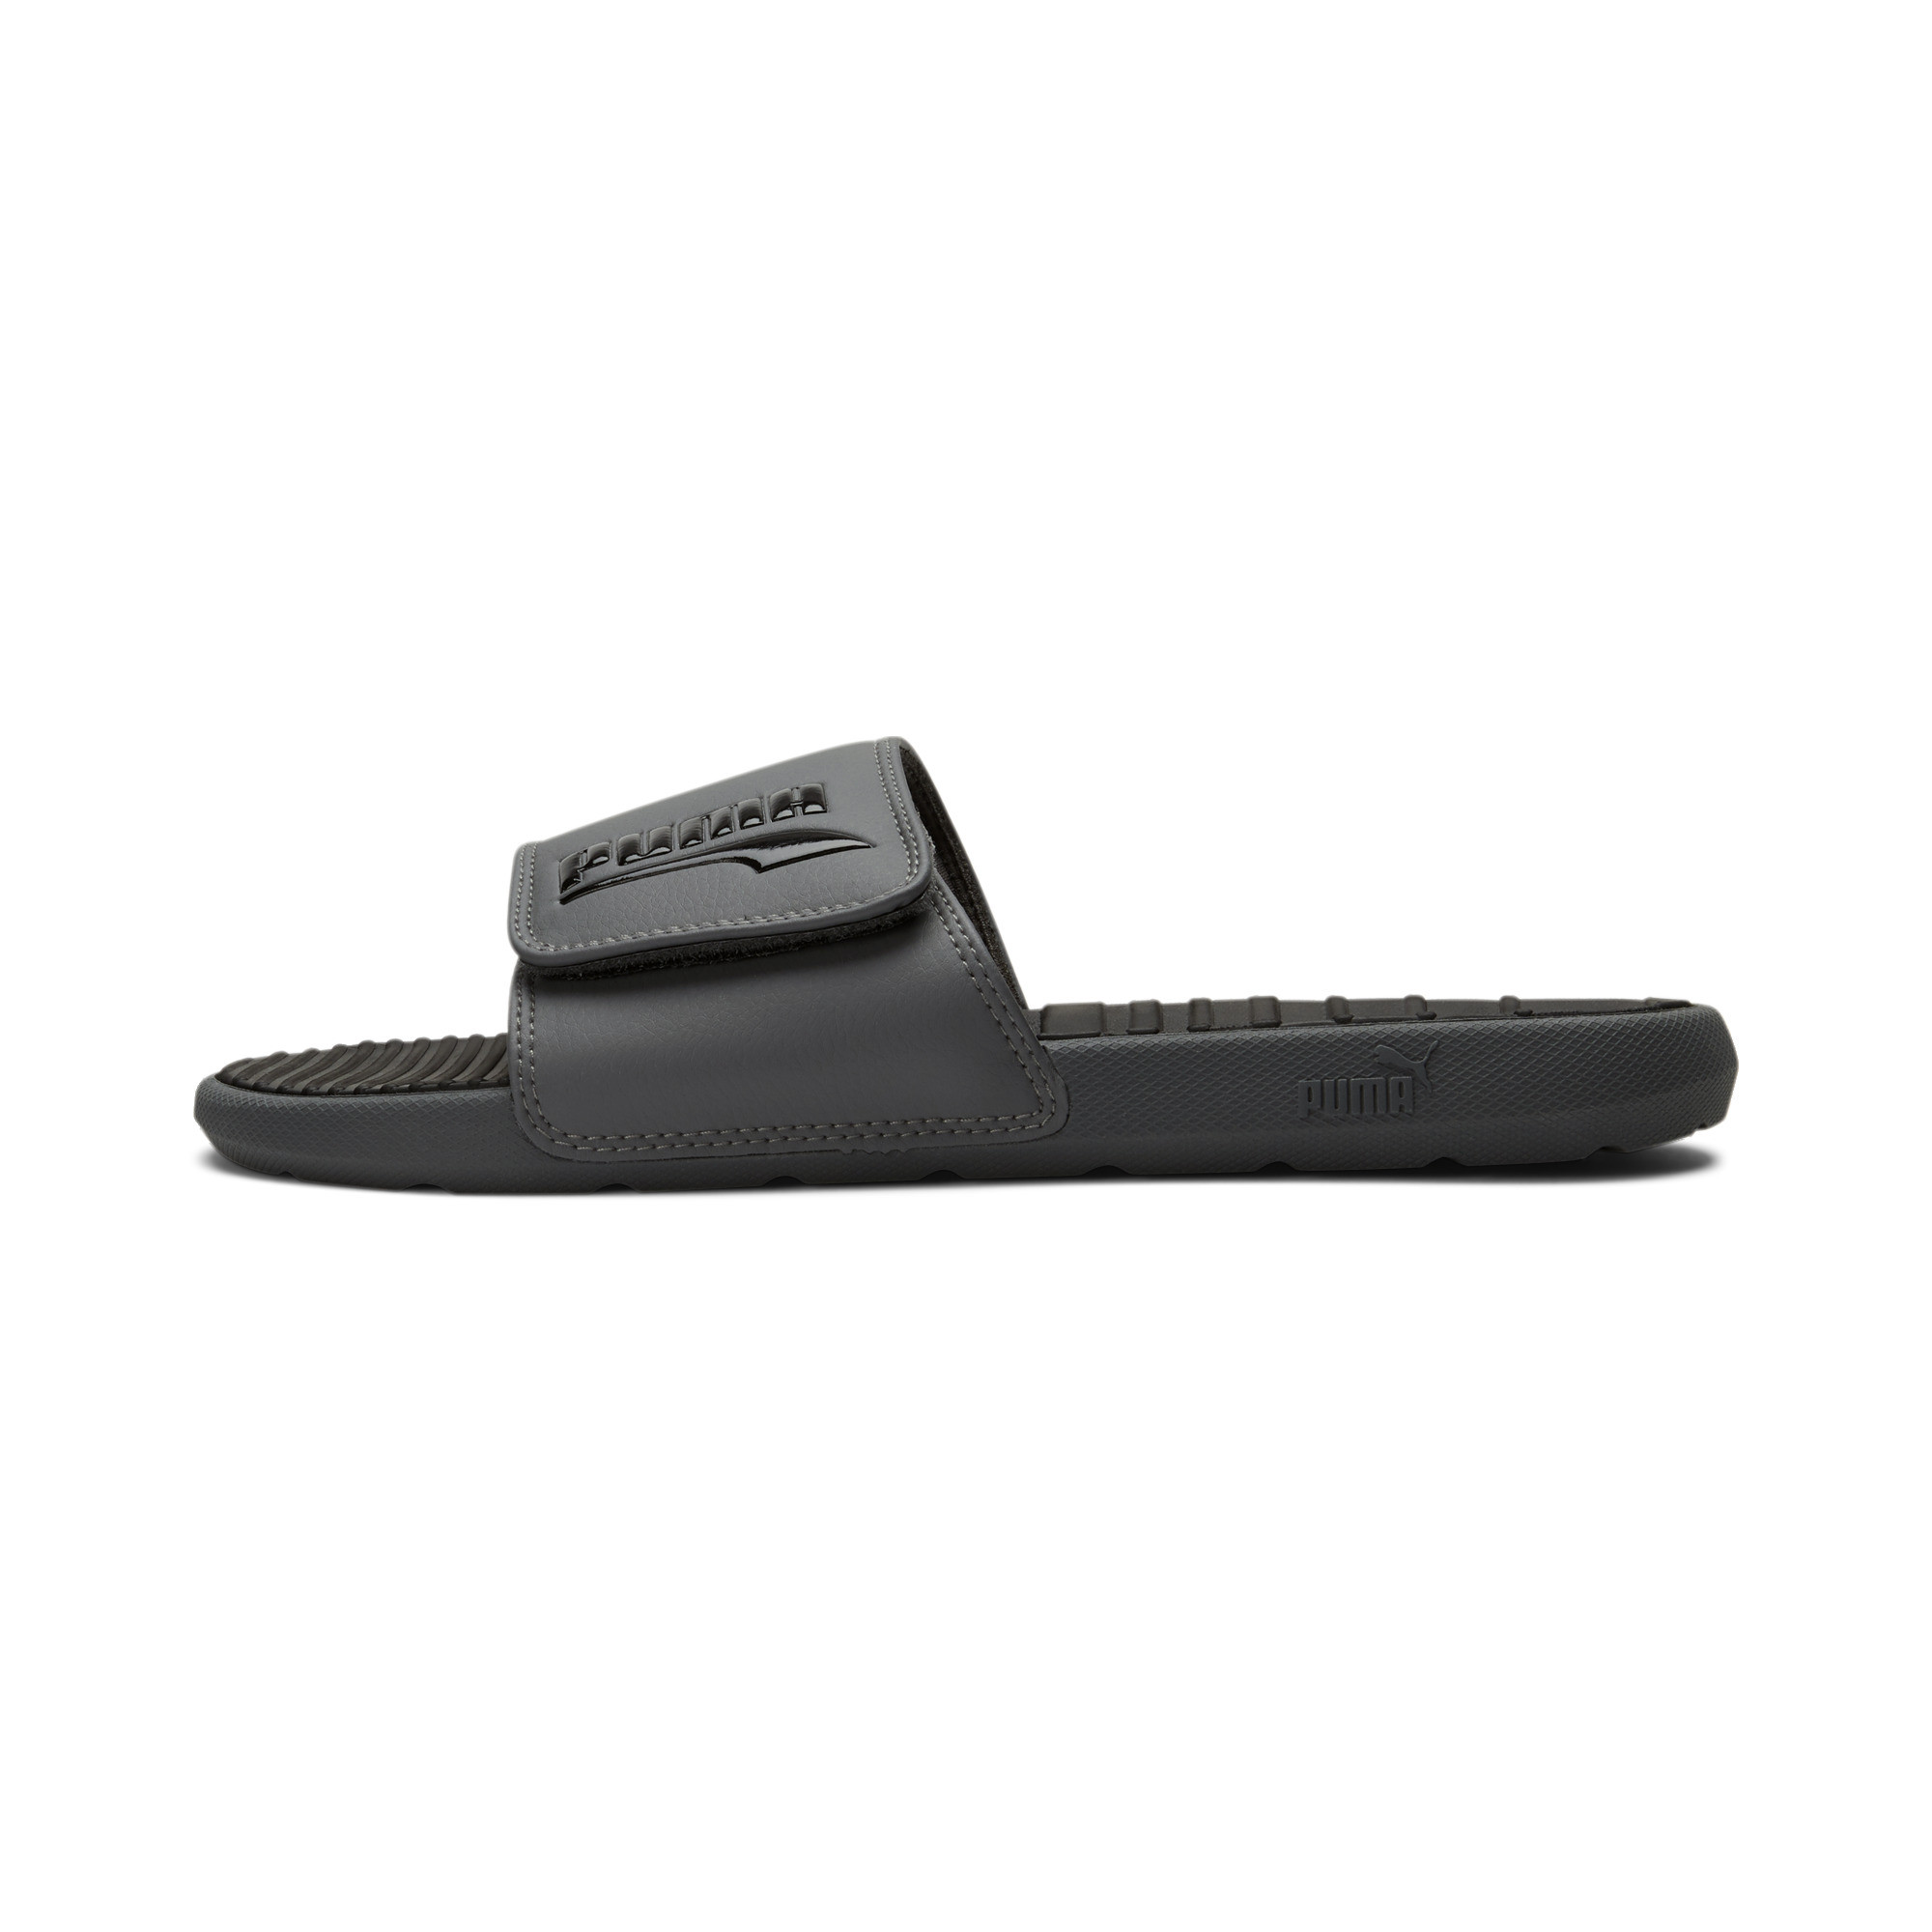 Puma Cool Cat Slide Sandals: Men's Adjustable Top Formstrip, Men's or Women's Sport & More 2 for $20 ($10 each) + Free Shipping